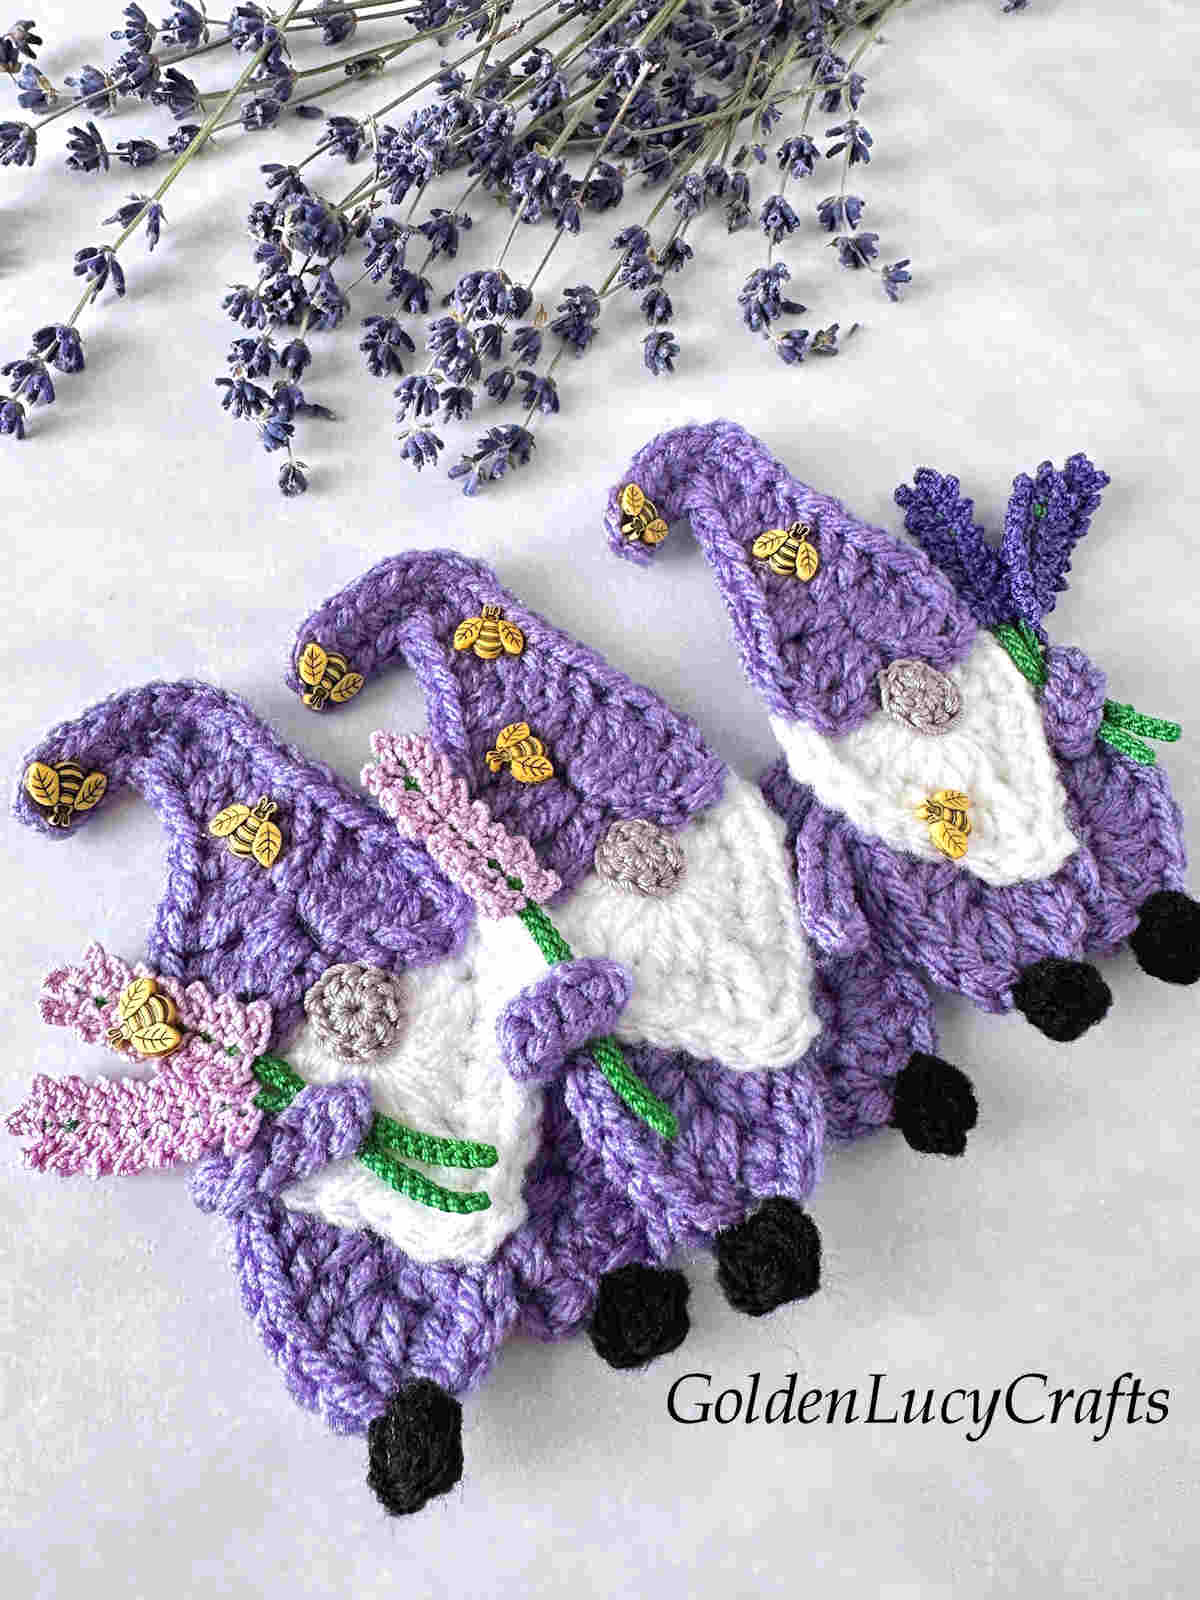 Three crocheted lavender gnomes.